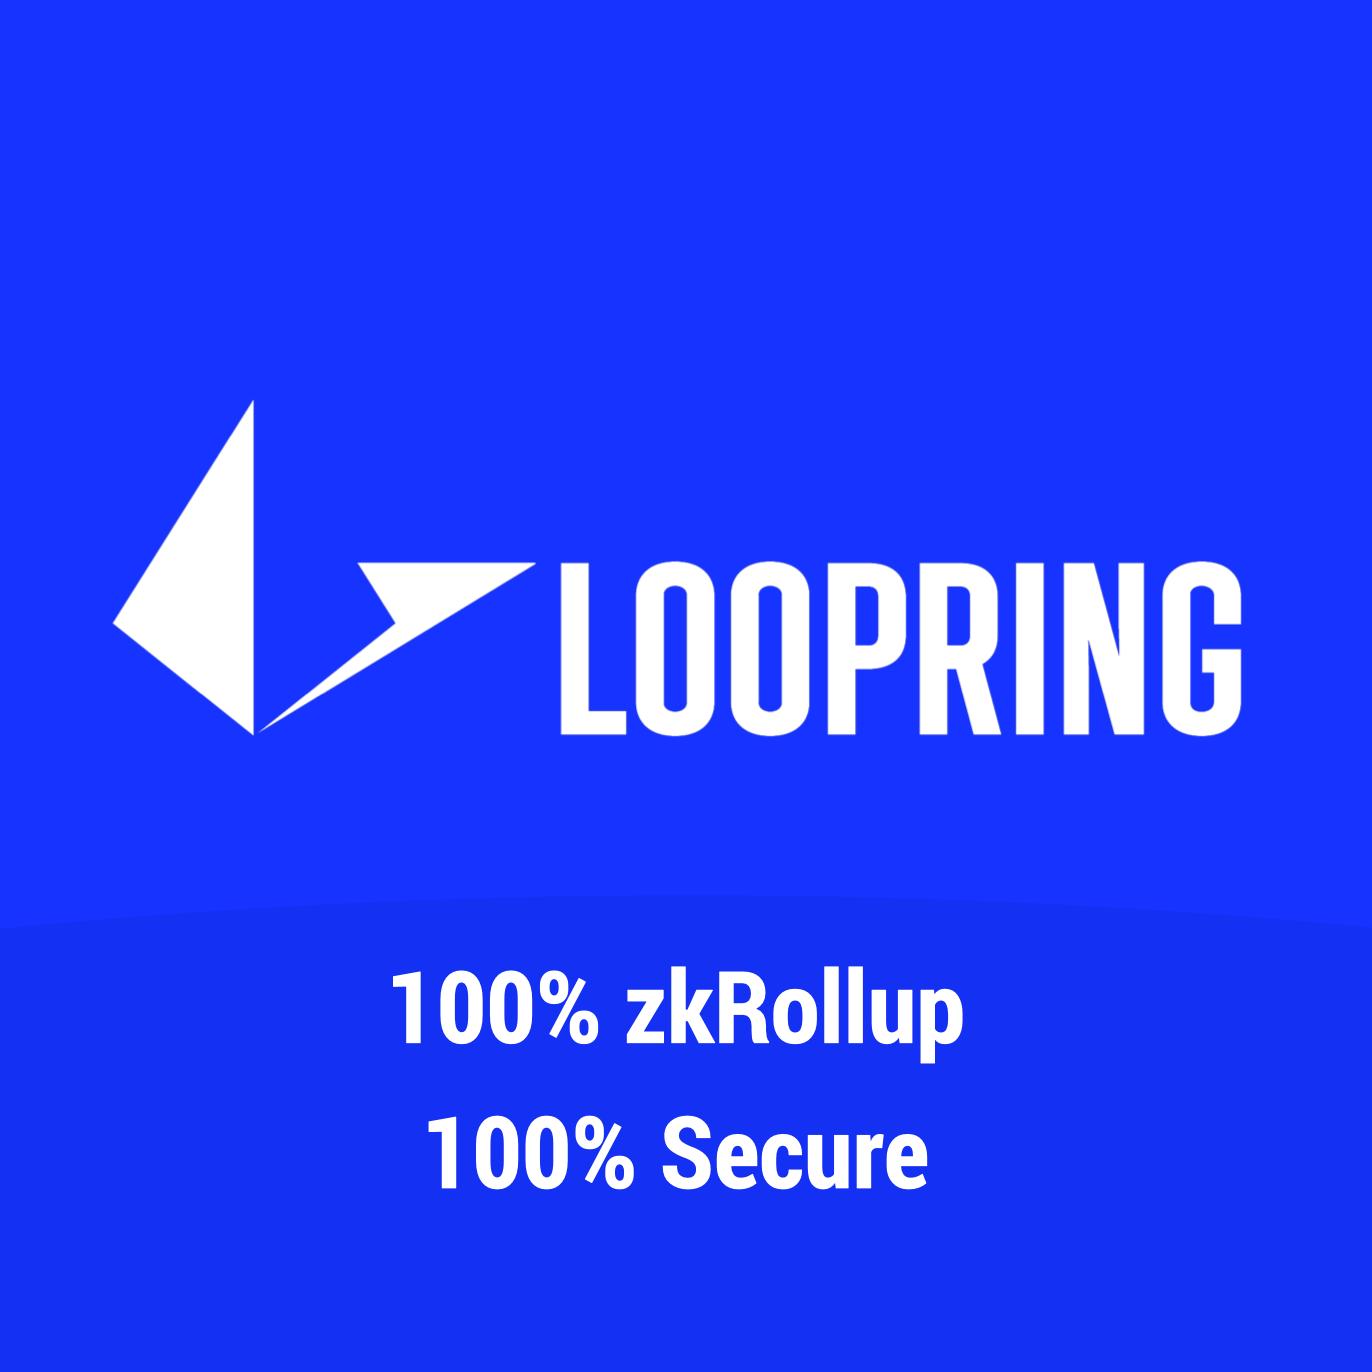 img 1 attached to Loopring [NEO] review by erdi yılmaz